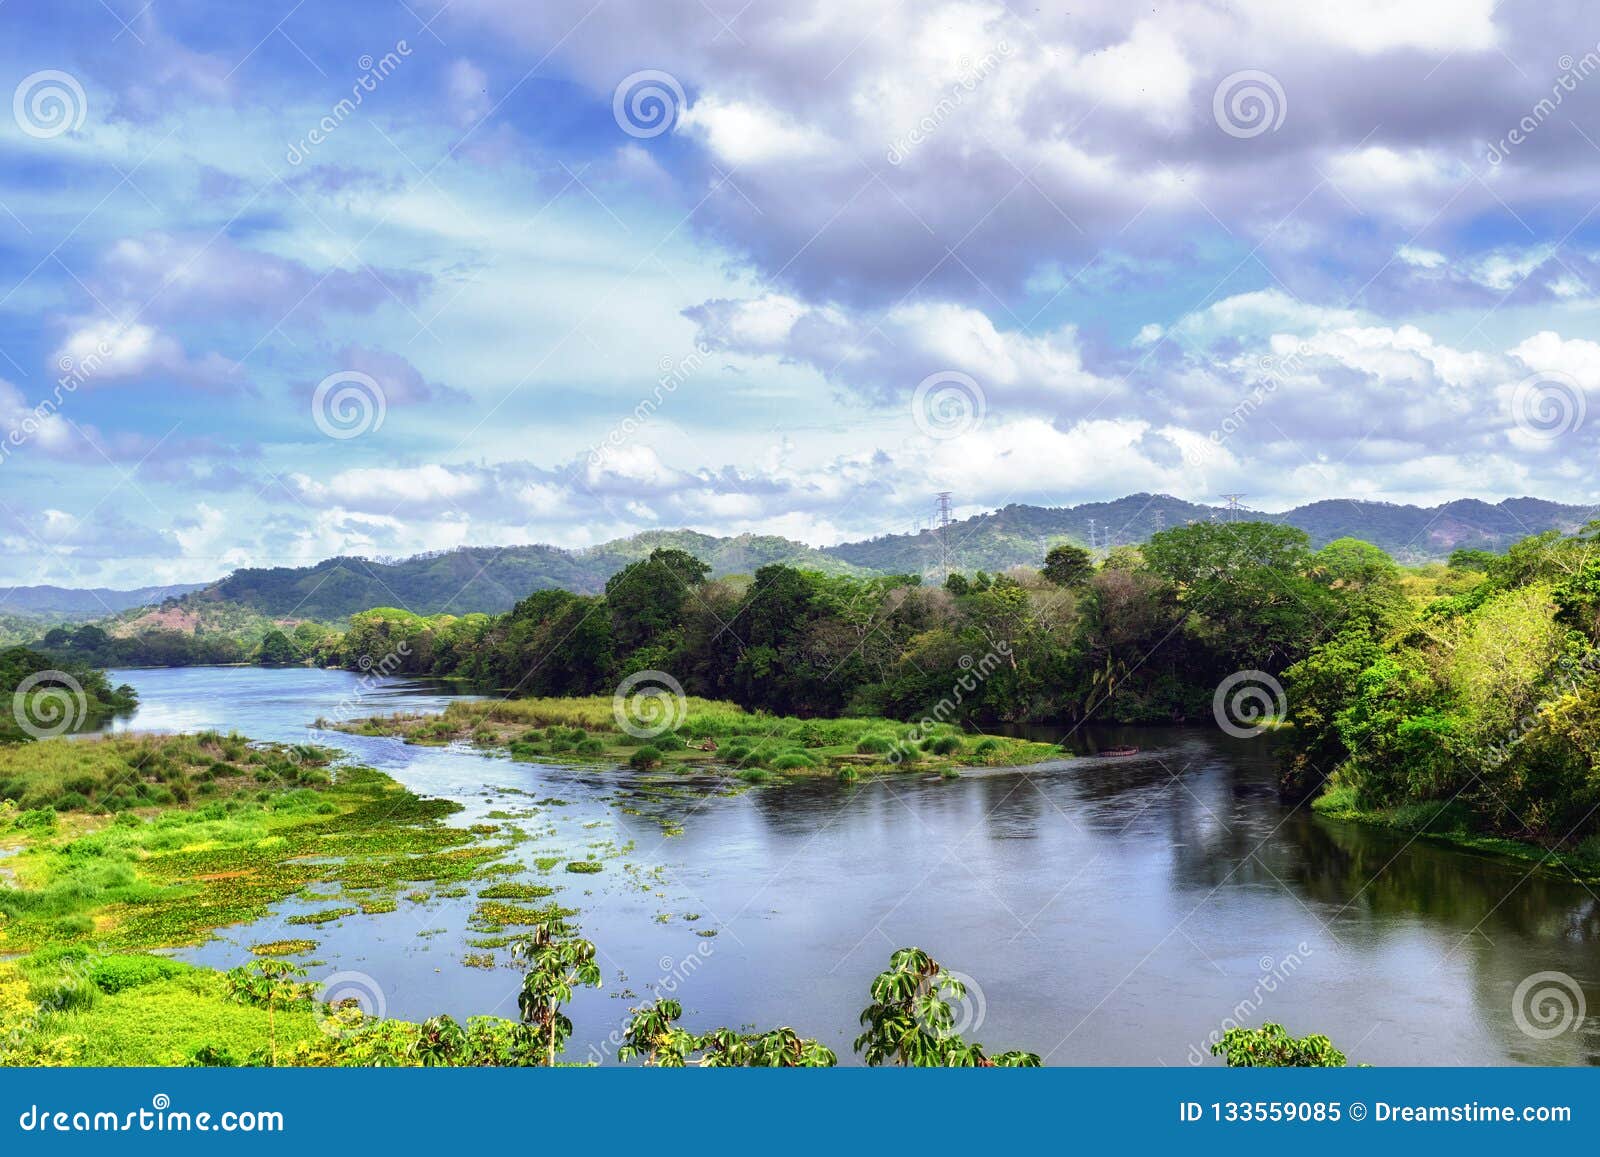 rio chagres river, changres national park, panama